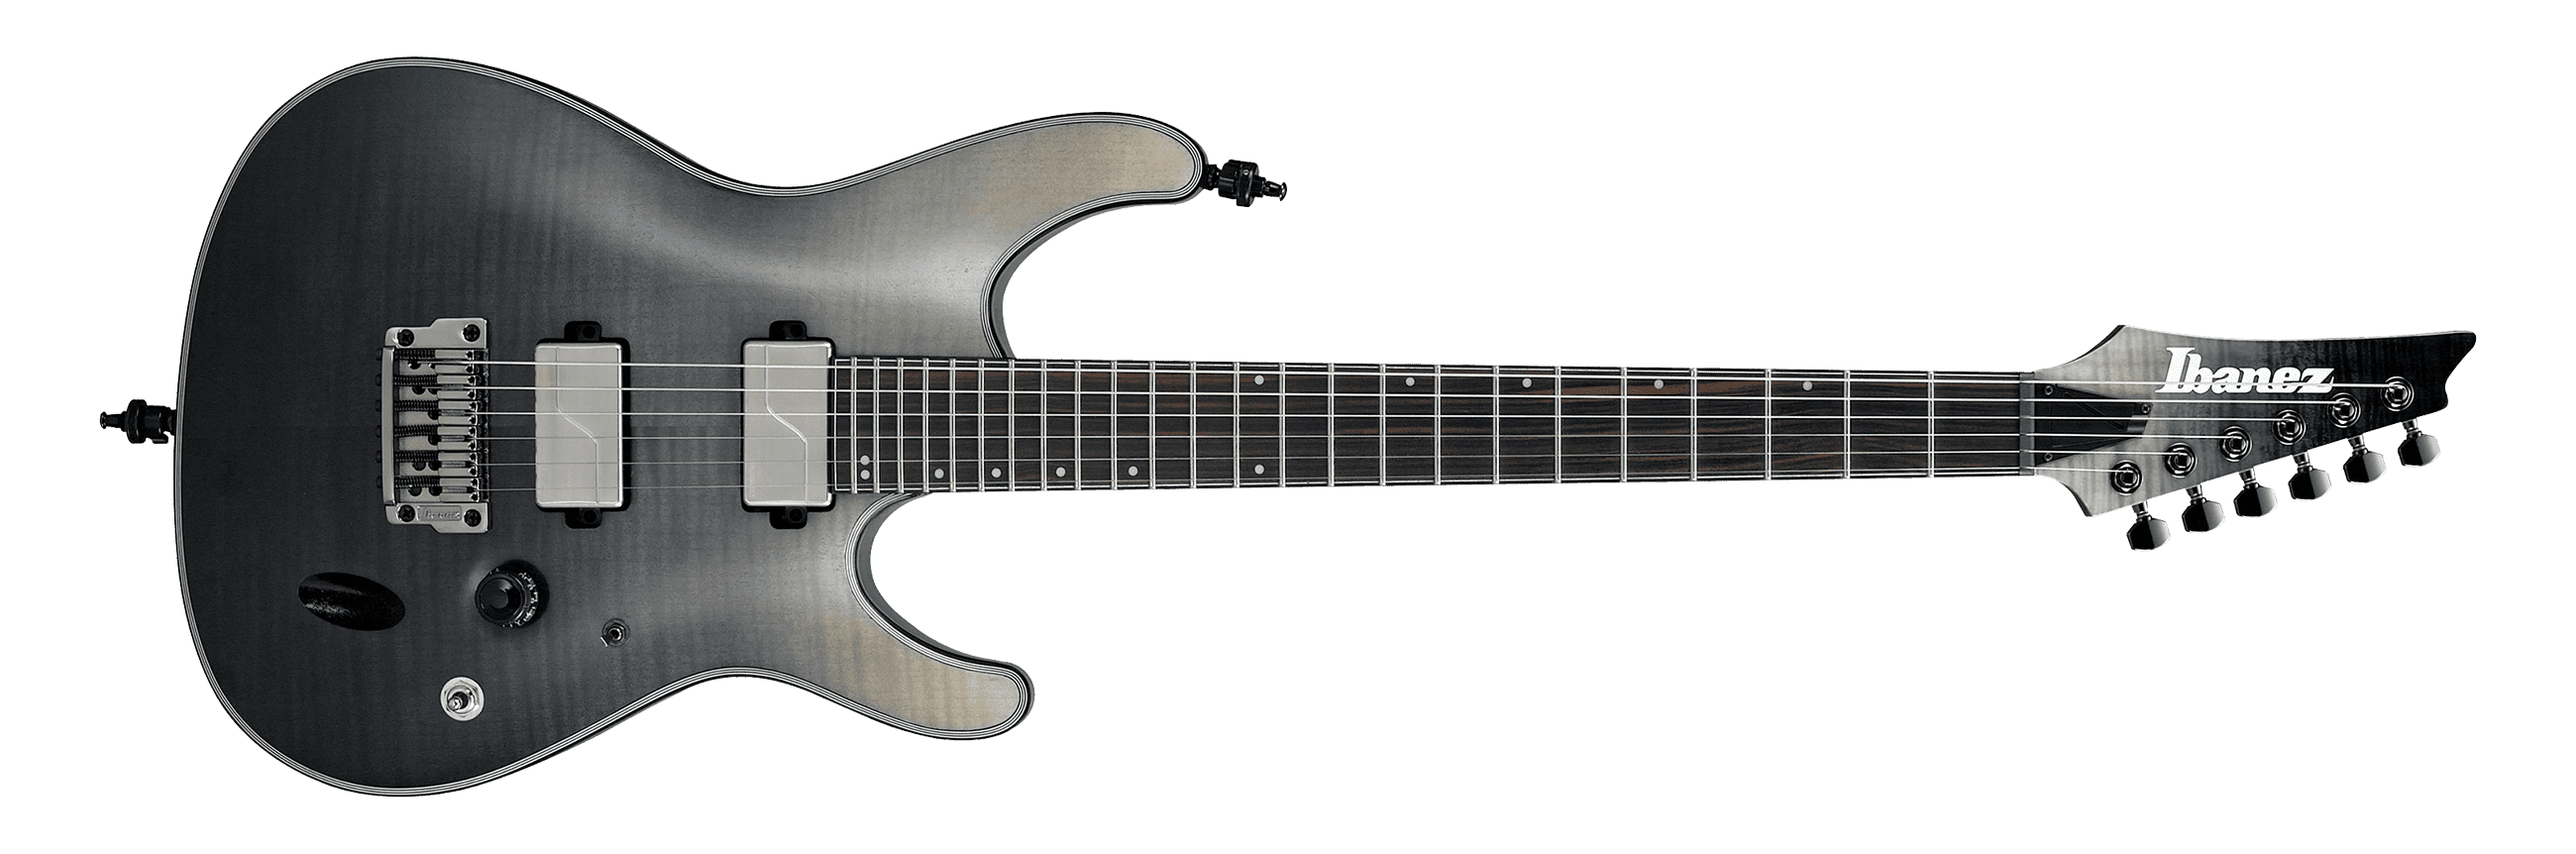 S Axion Label Guitars